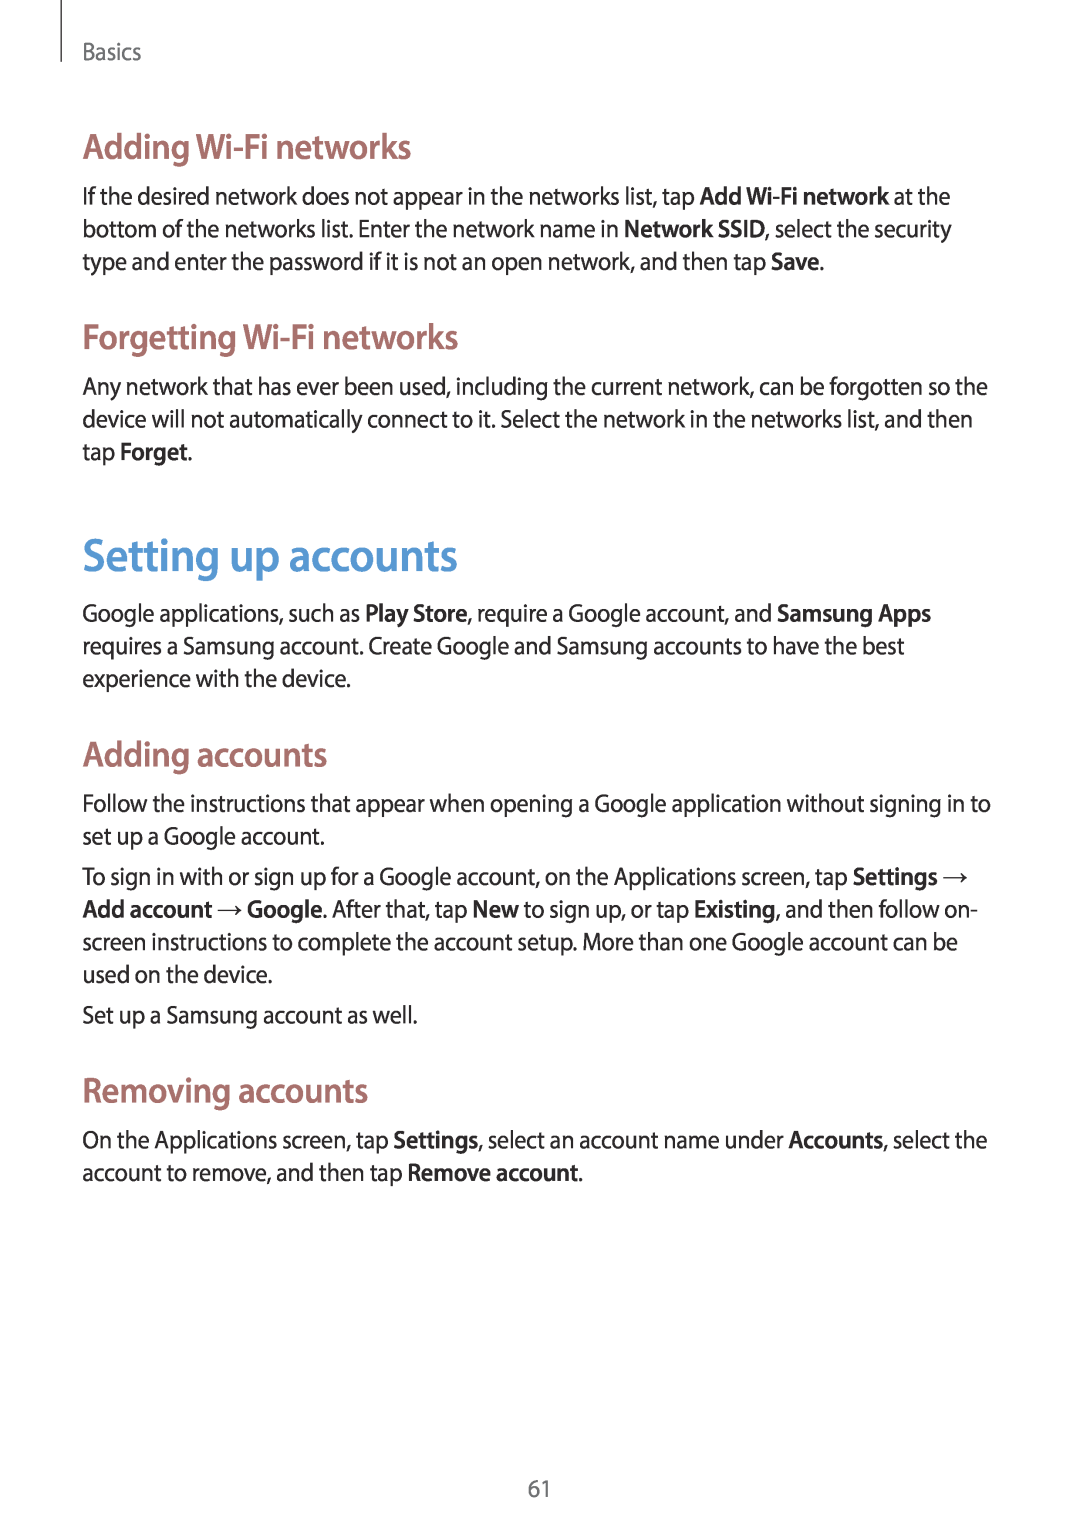 Samsung EK-GC100 Setting up accounts, Adding Wi-Fi networks, Forgetting Wi-Fi networks, Adding accounts, Removing accounts 